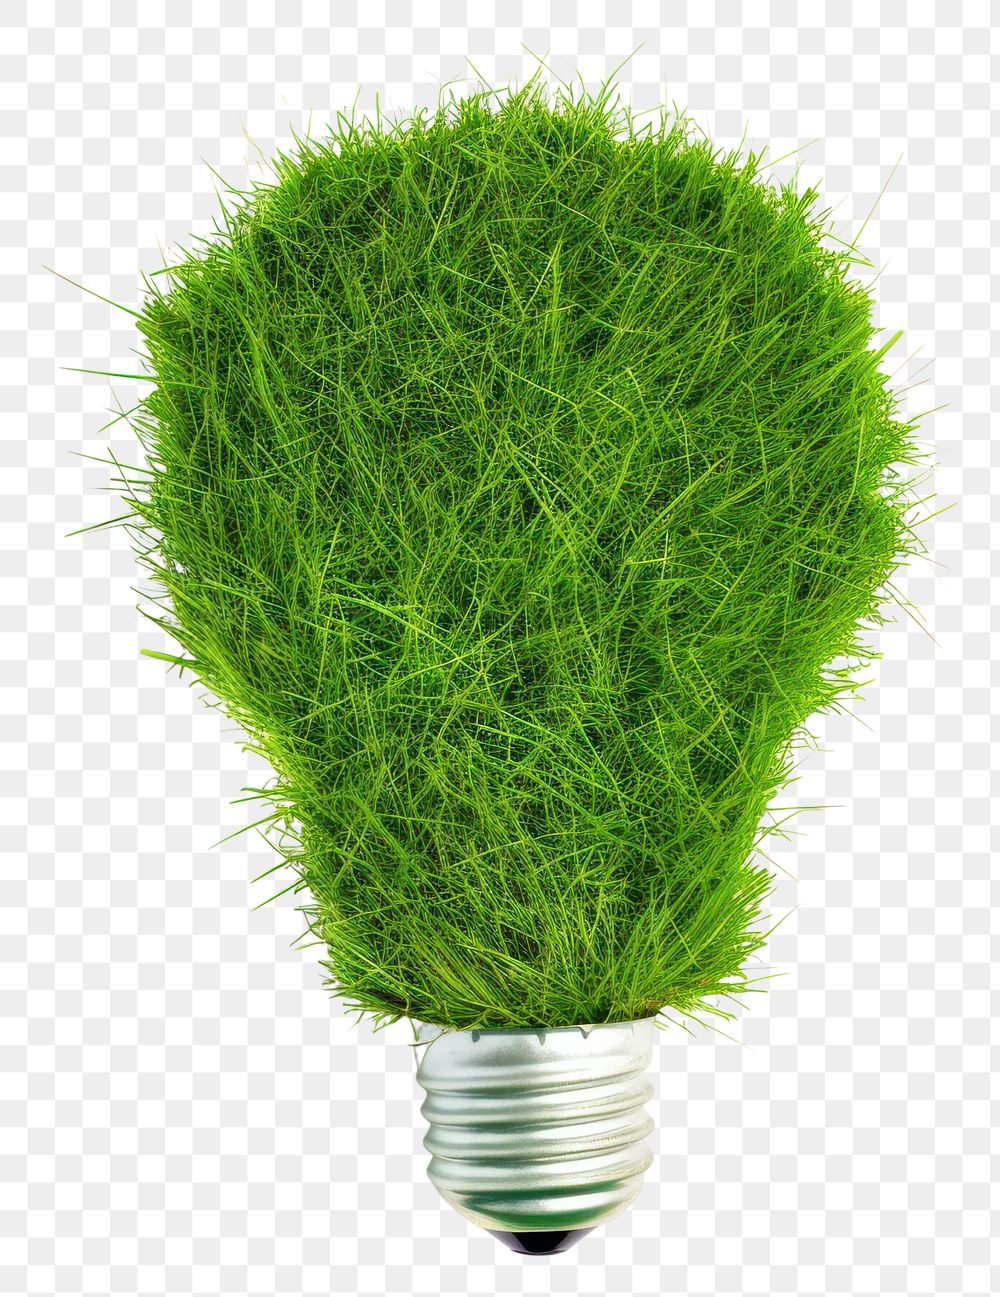 PNG Lightbulb shape lawn grass seasoning plant.